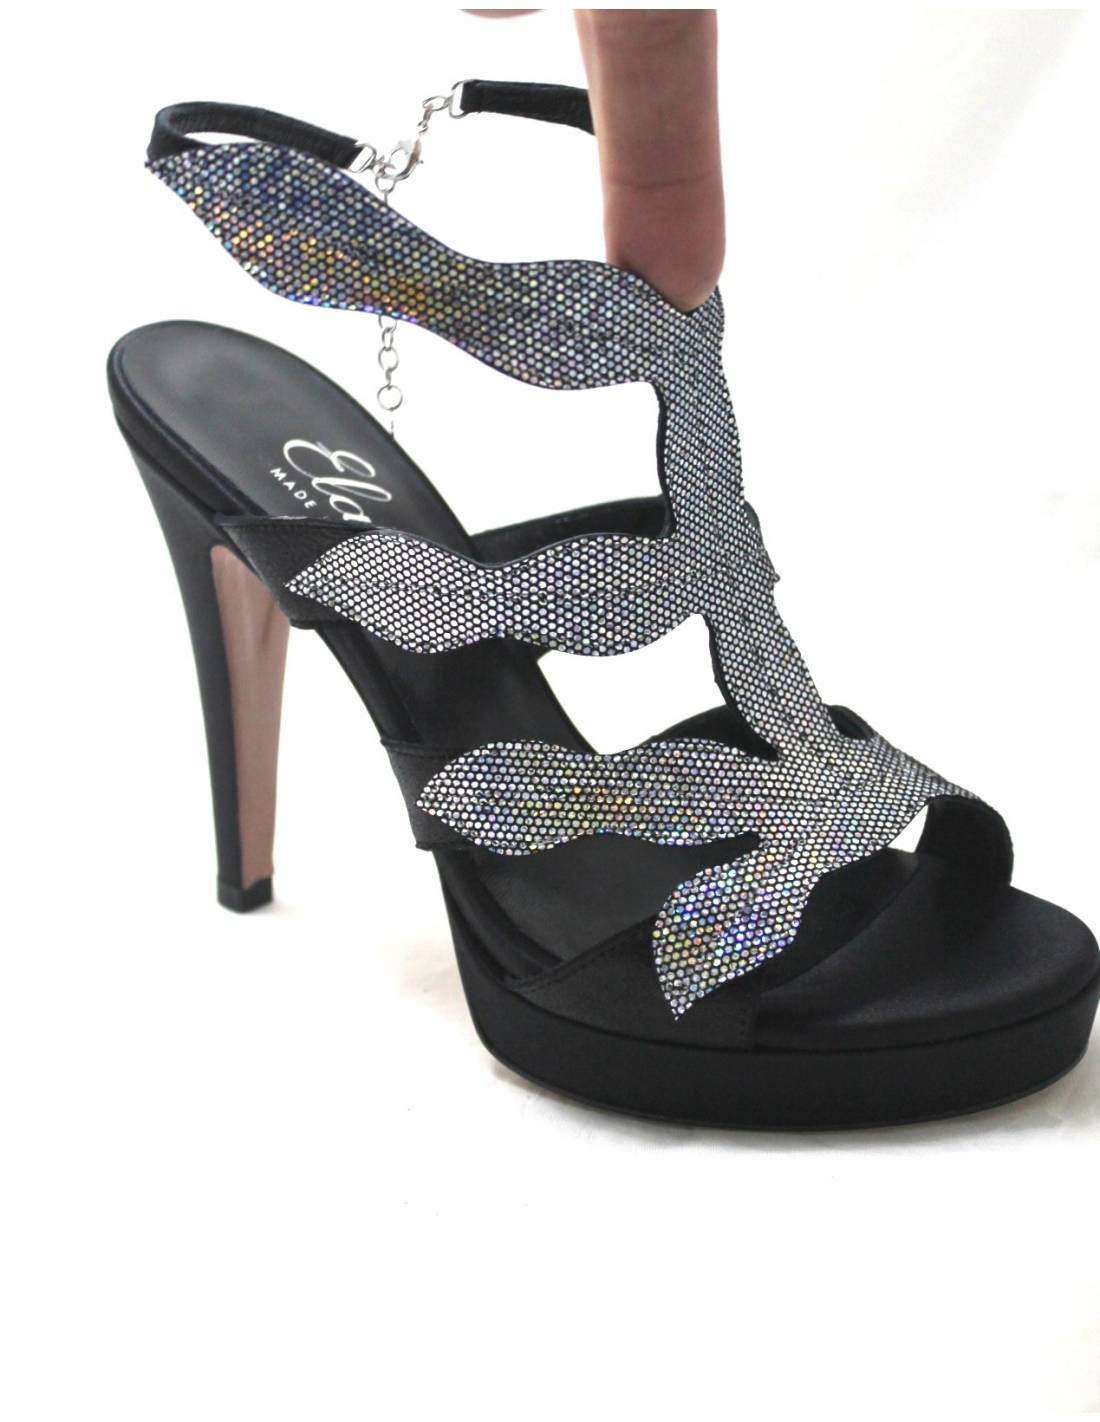 sandalo elegante ELATA 18102 saten nero, argento, stras tacco alto online  Vendita sandalo elegante ELATA 18102 saten nero, argen